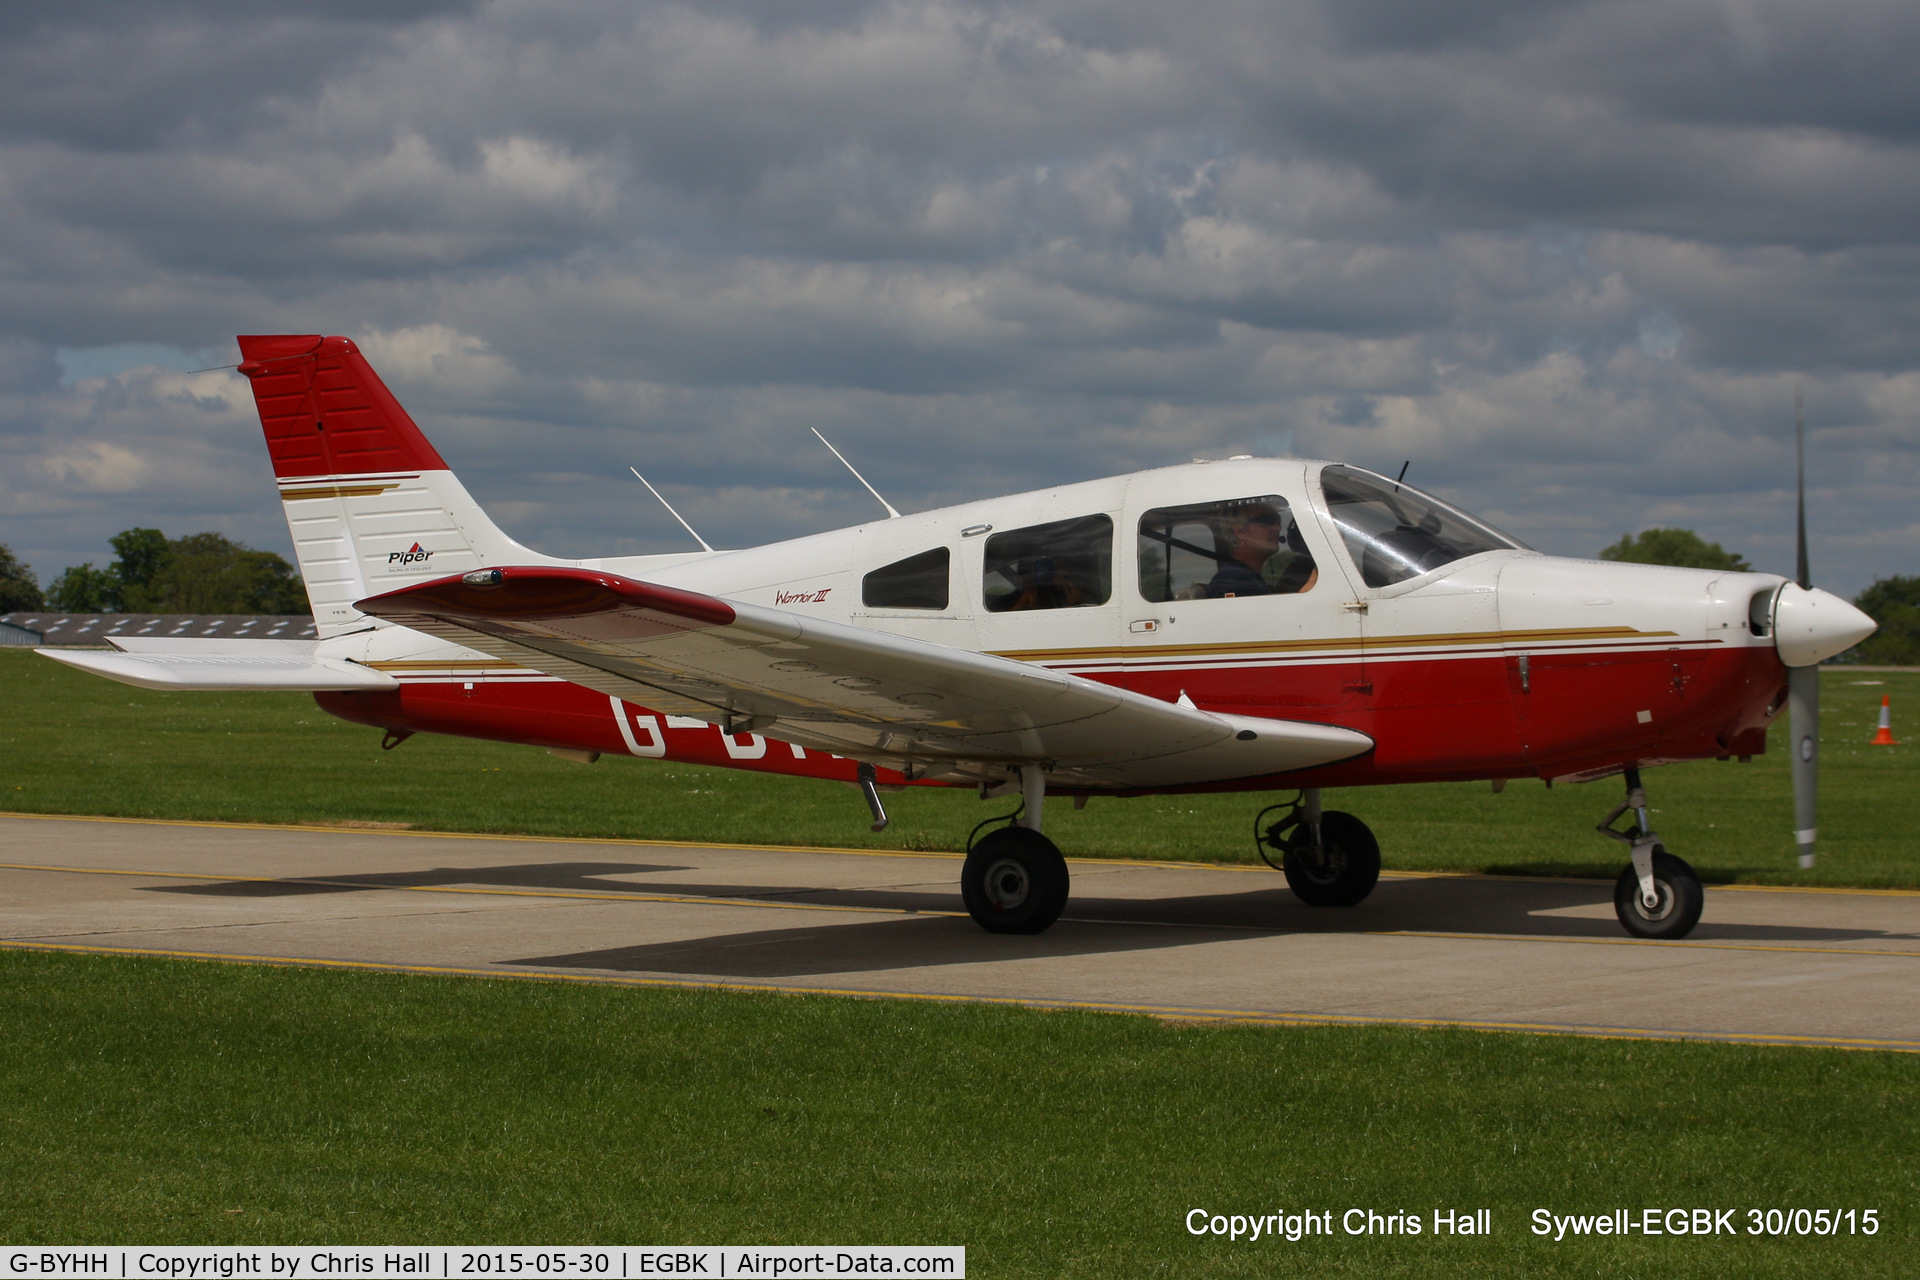 G-BYHH, 1999 Piper PA-28-161 Warrior III C/N 2842050, at Aeroexpo 2015